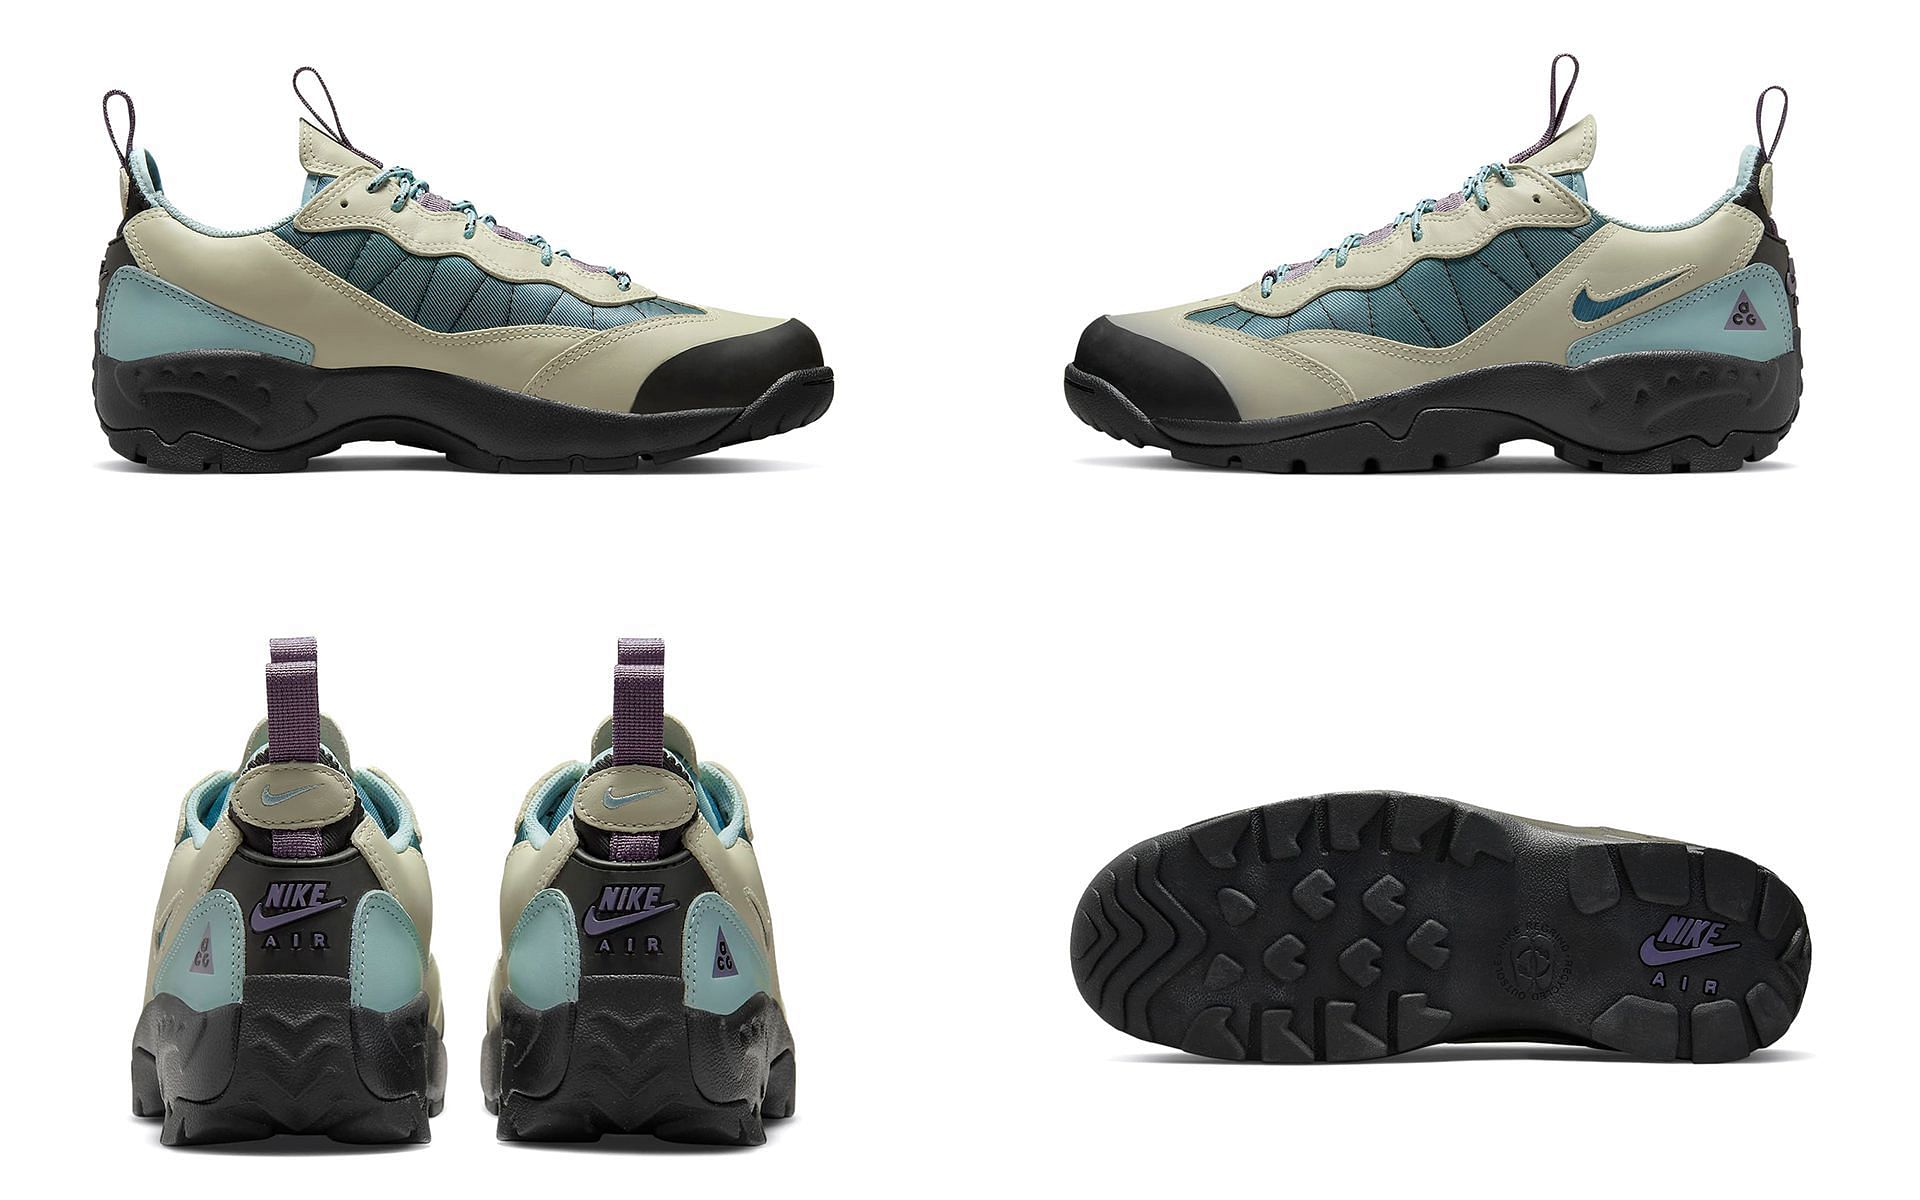 Take a closer look at the Nike ACG Air Mada Light Stone shoes (Image via Sportskeeda)